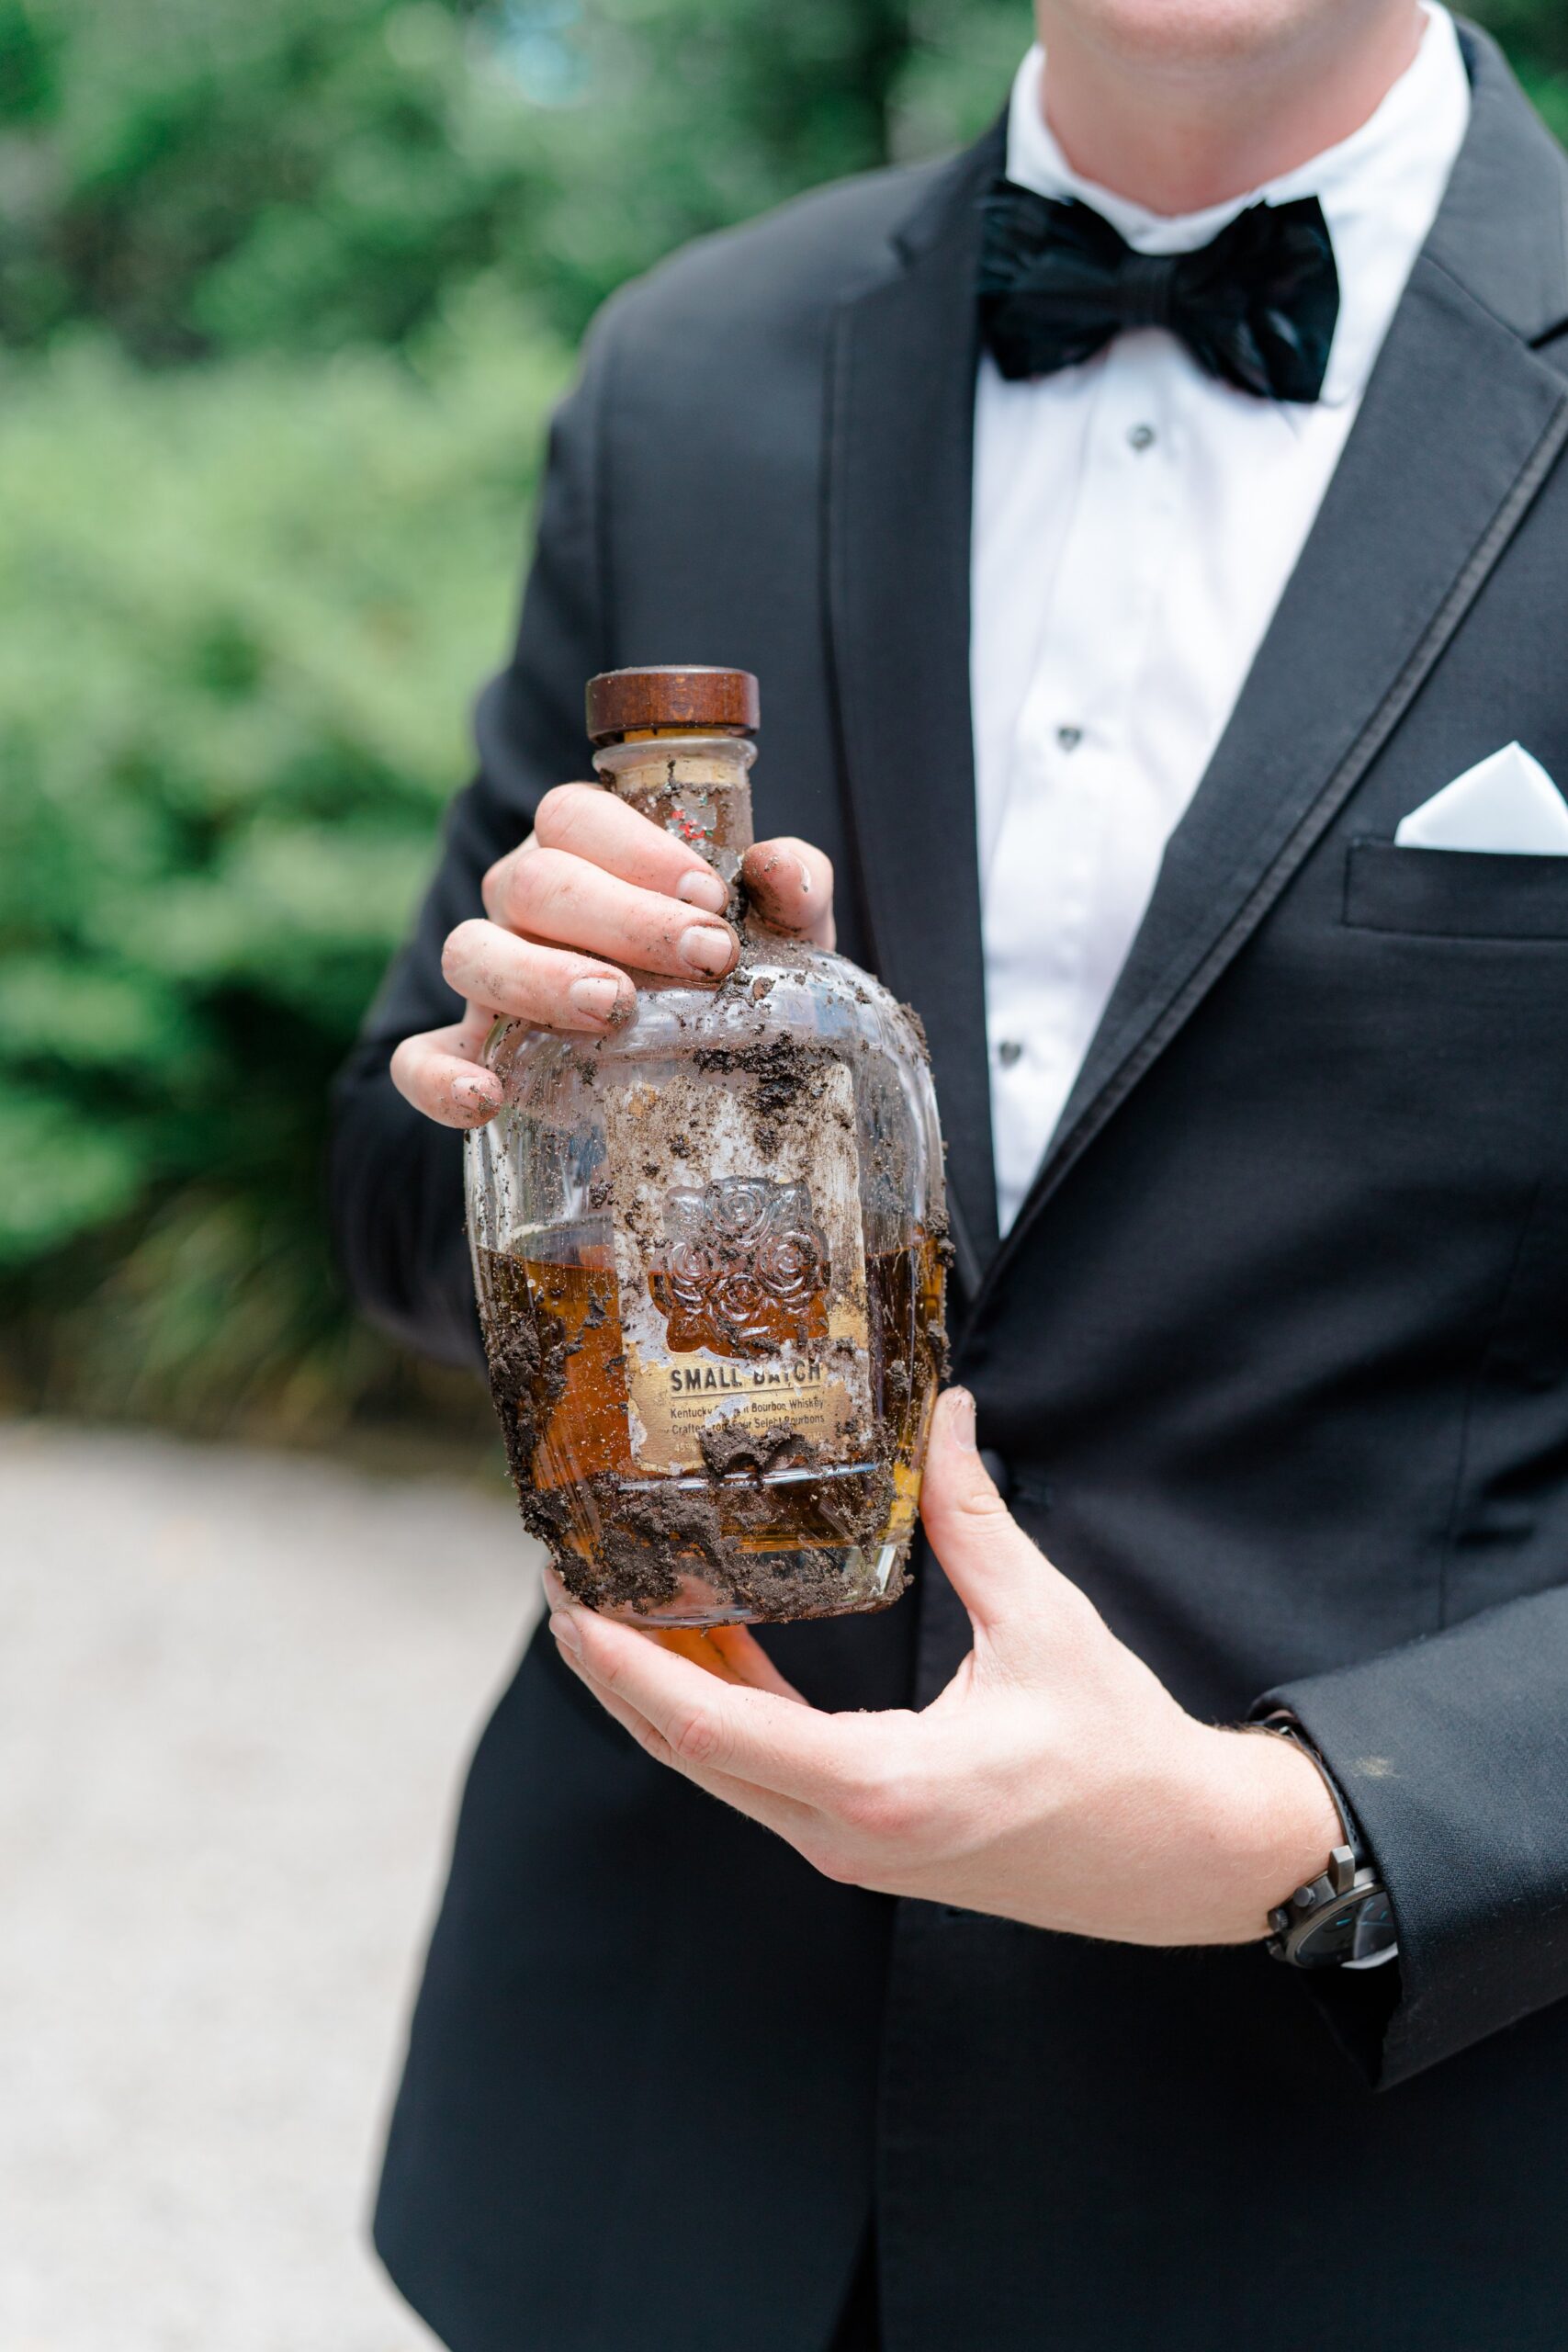 dirty bourbon bottle. Bury the bourbon southern tradition. Black brackish bowtie.